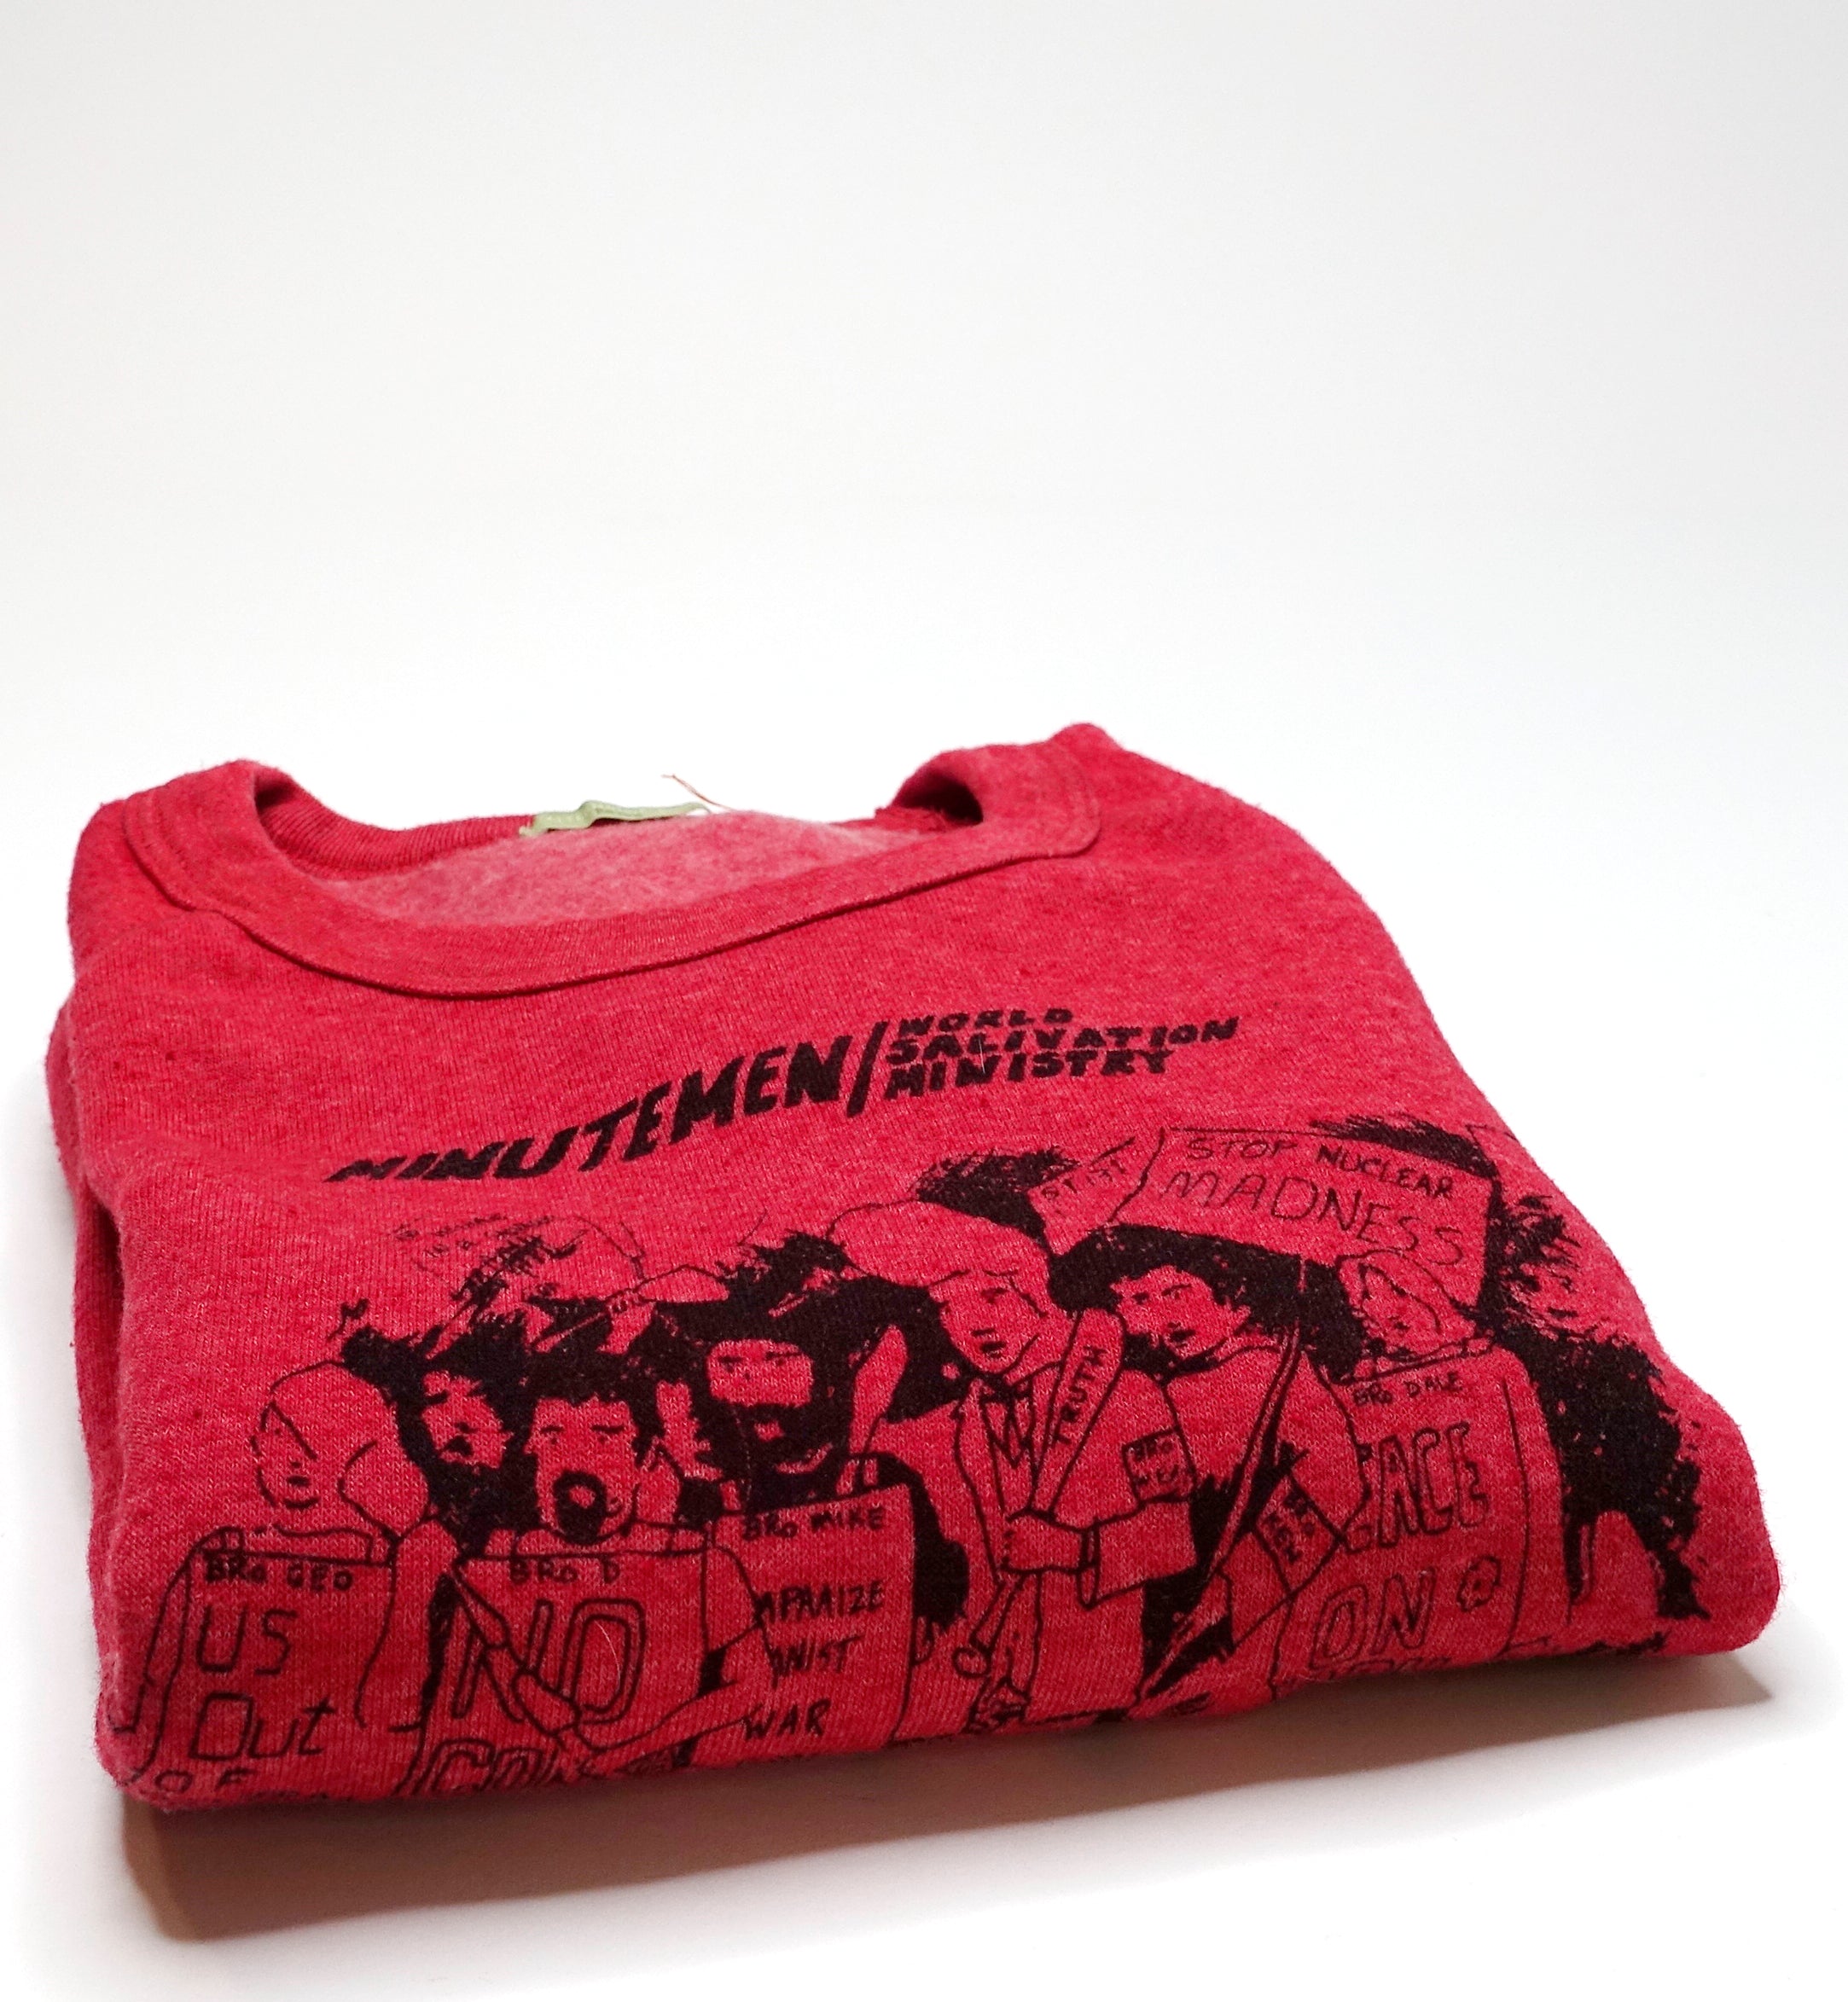 Minutemen - World Salvation Ministry / Co-Conspirators 1985 Tour (Bootleg By Me) Sweat Shirt Size XL